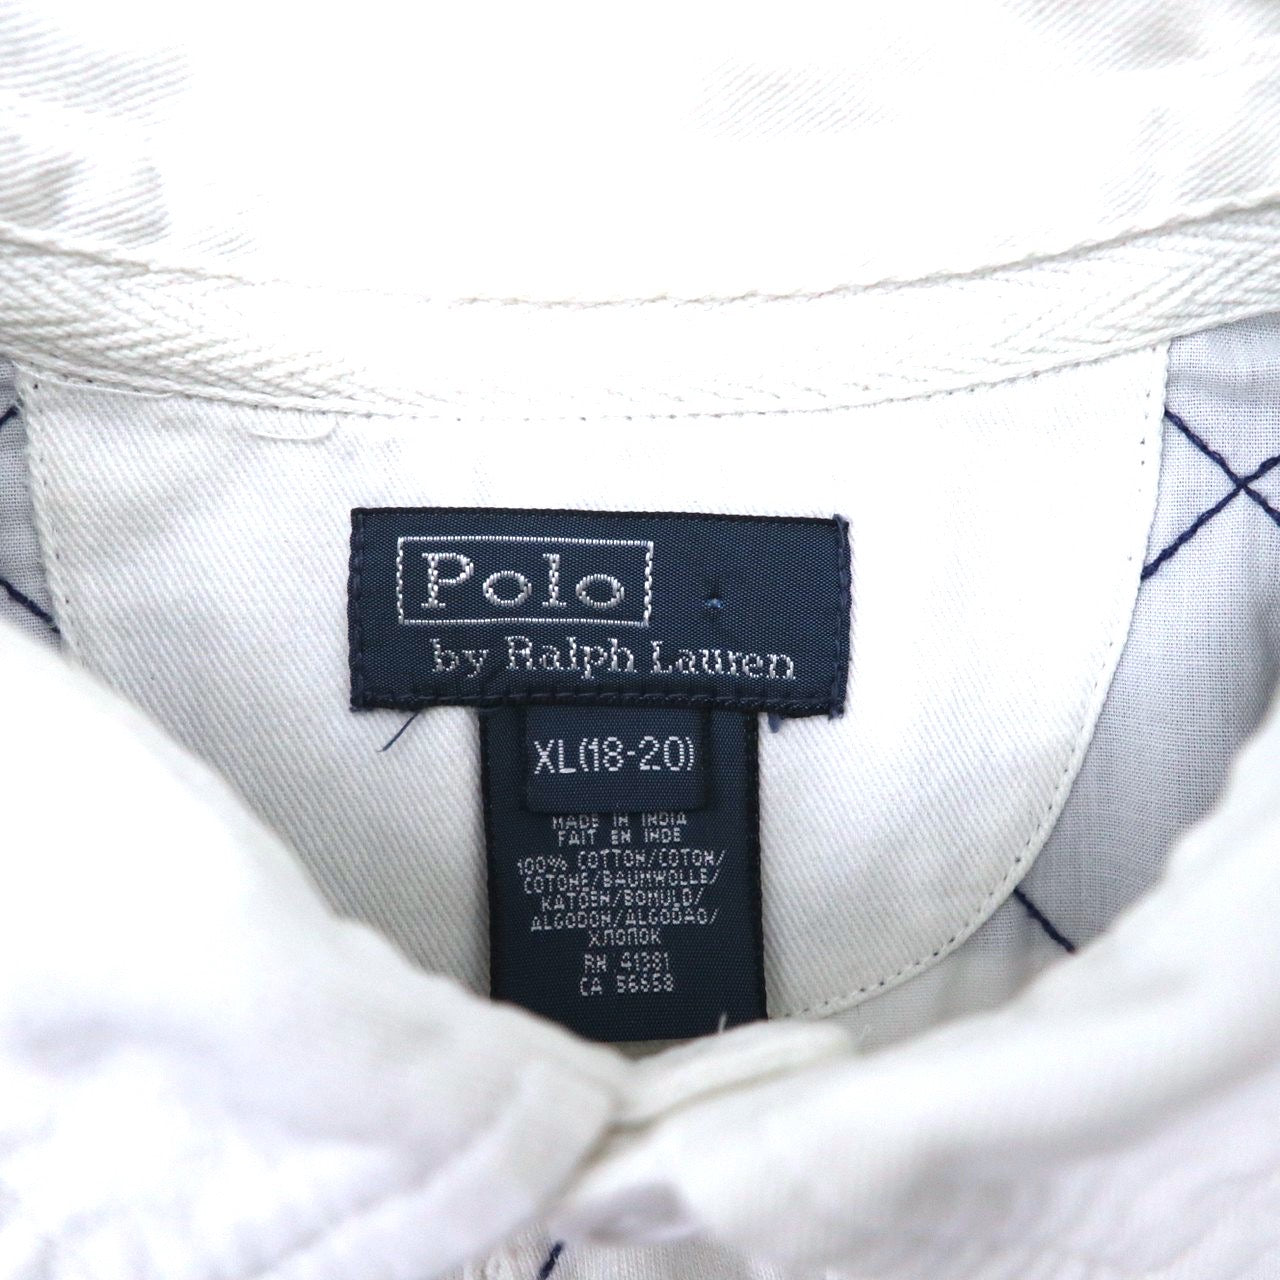 Polo by Ralph Lauren ボーダーポロシャツ XL ホワイト ネイビー コットン ビッグポニー刺繍 ナンバリング